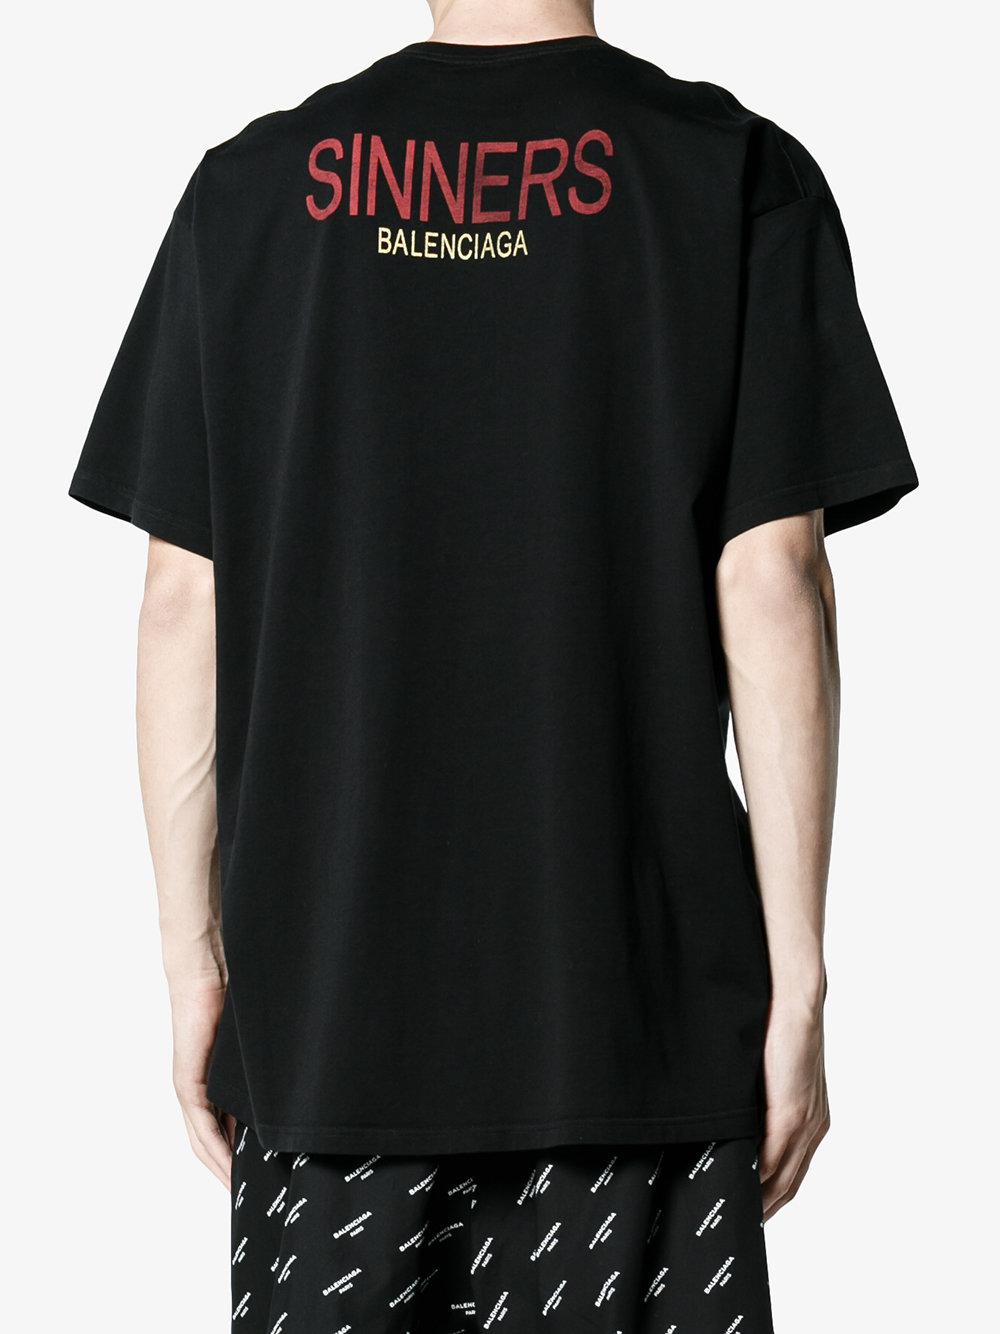 sinners balenciaga shirt